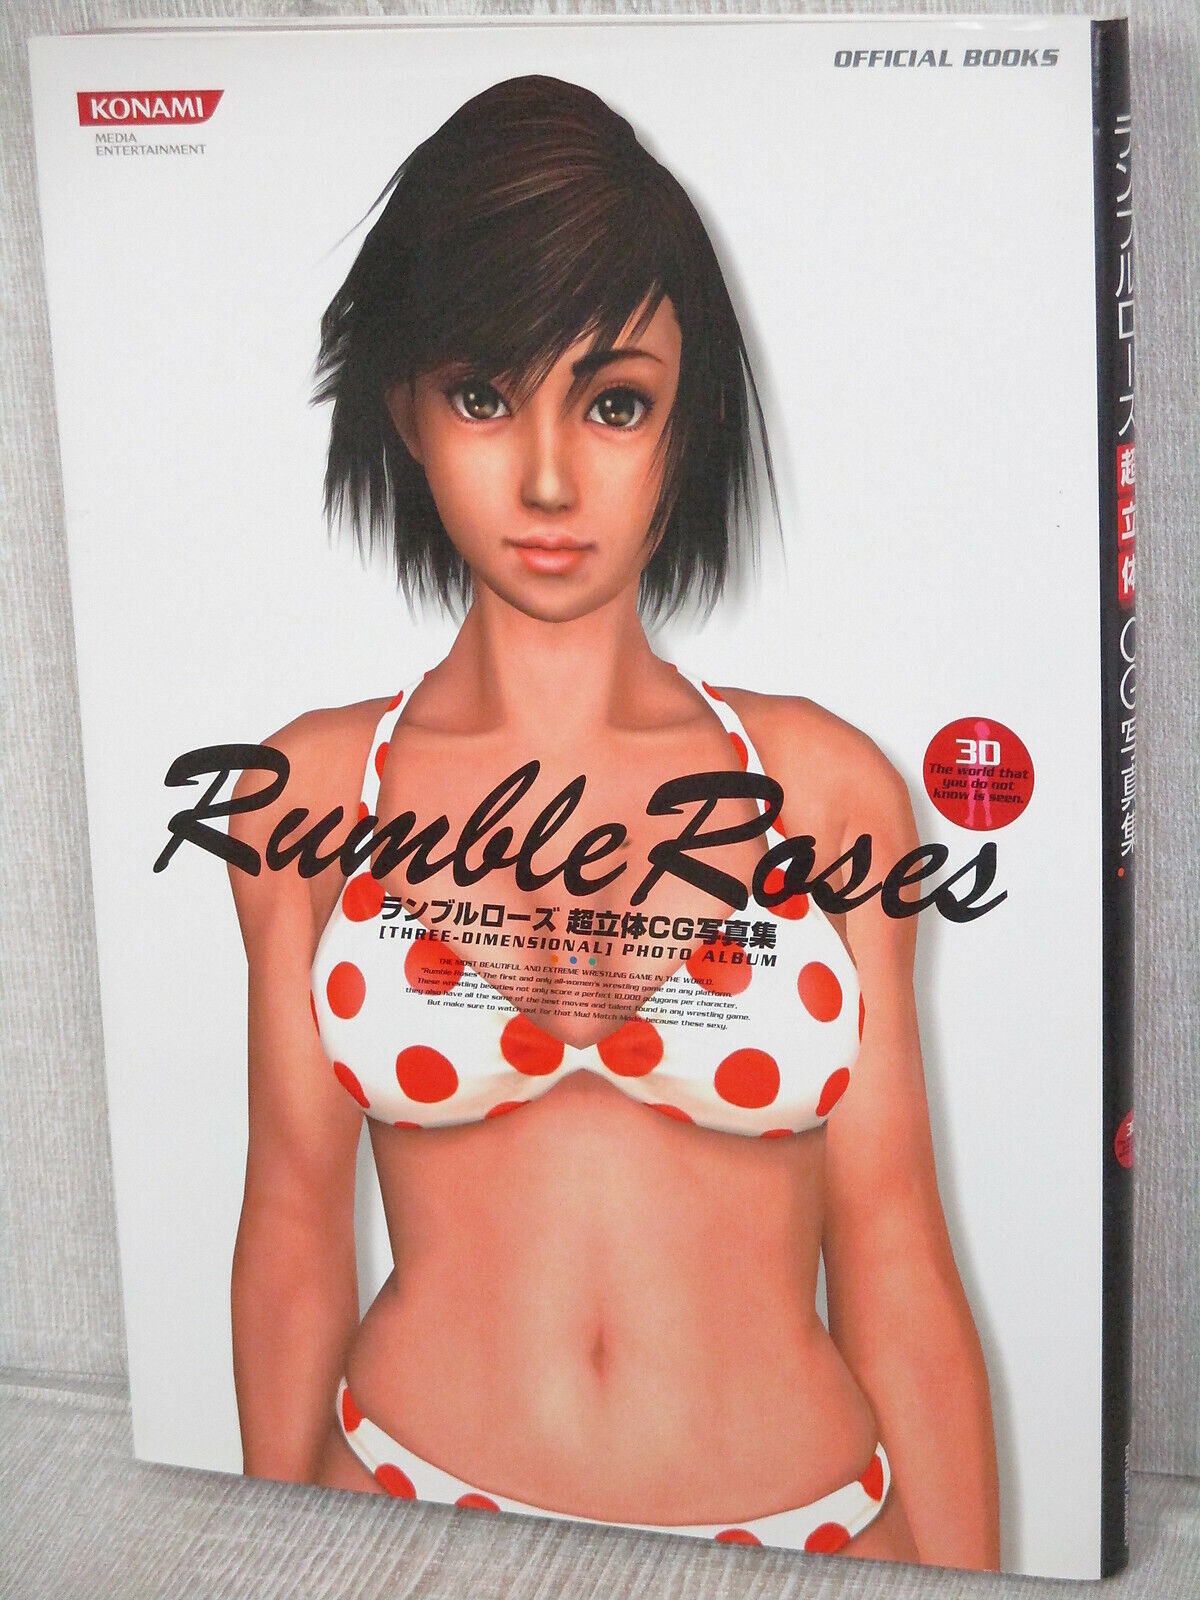 RUMBLE ROSES 3D Photo Book w/3D Paper Glasses Art Works Fan 2005 Japan KM32